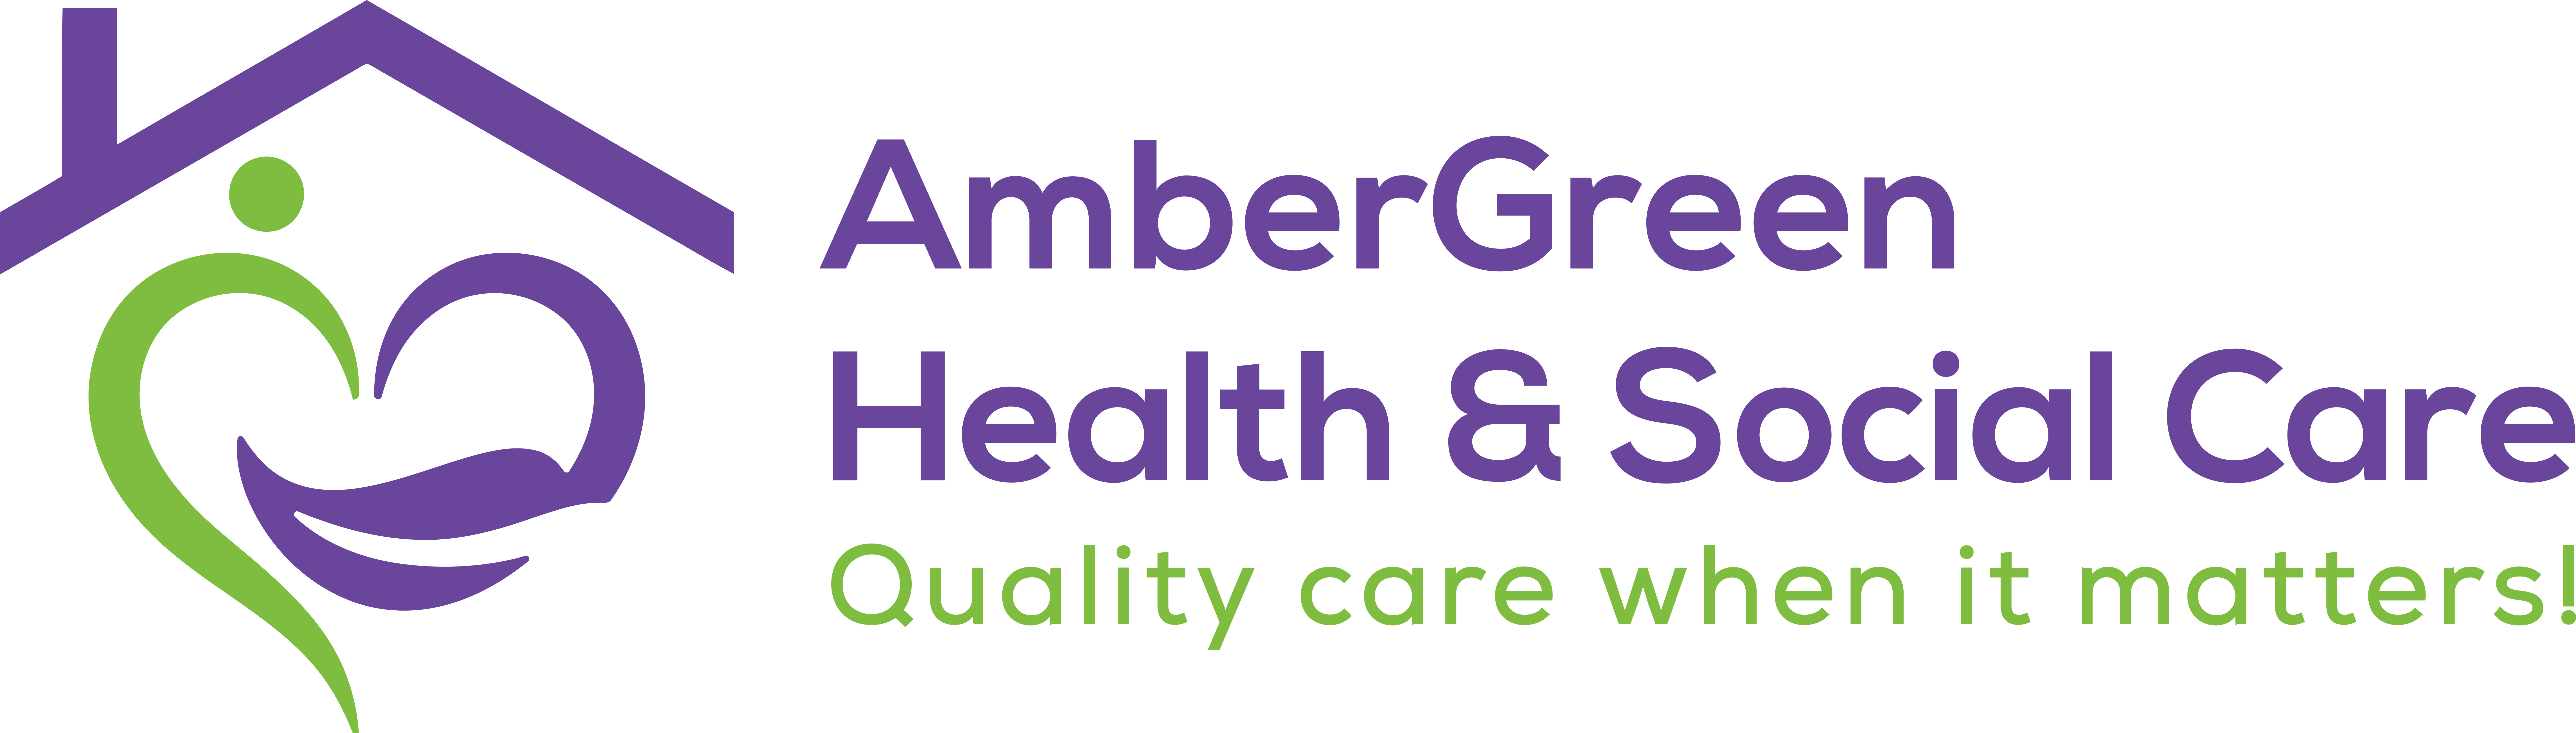 AmberGreen Health & Social Care